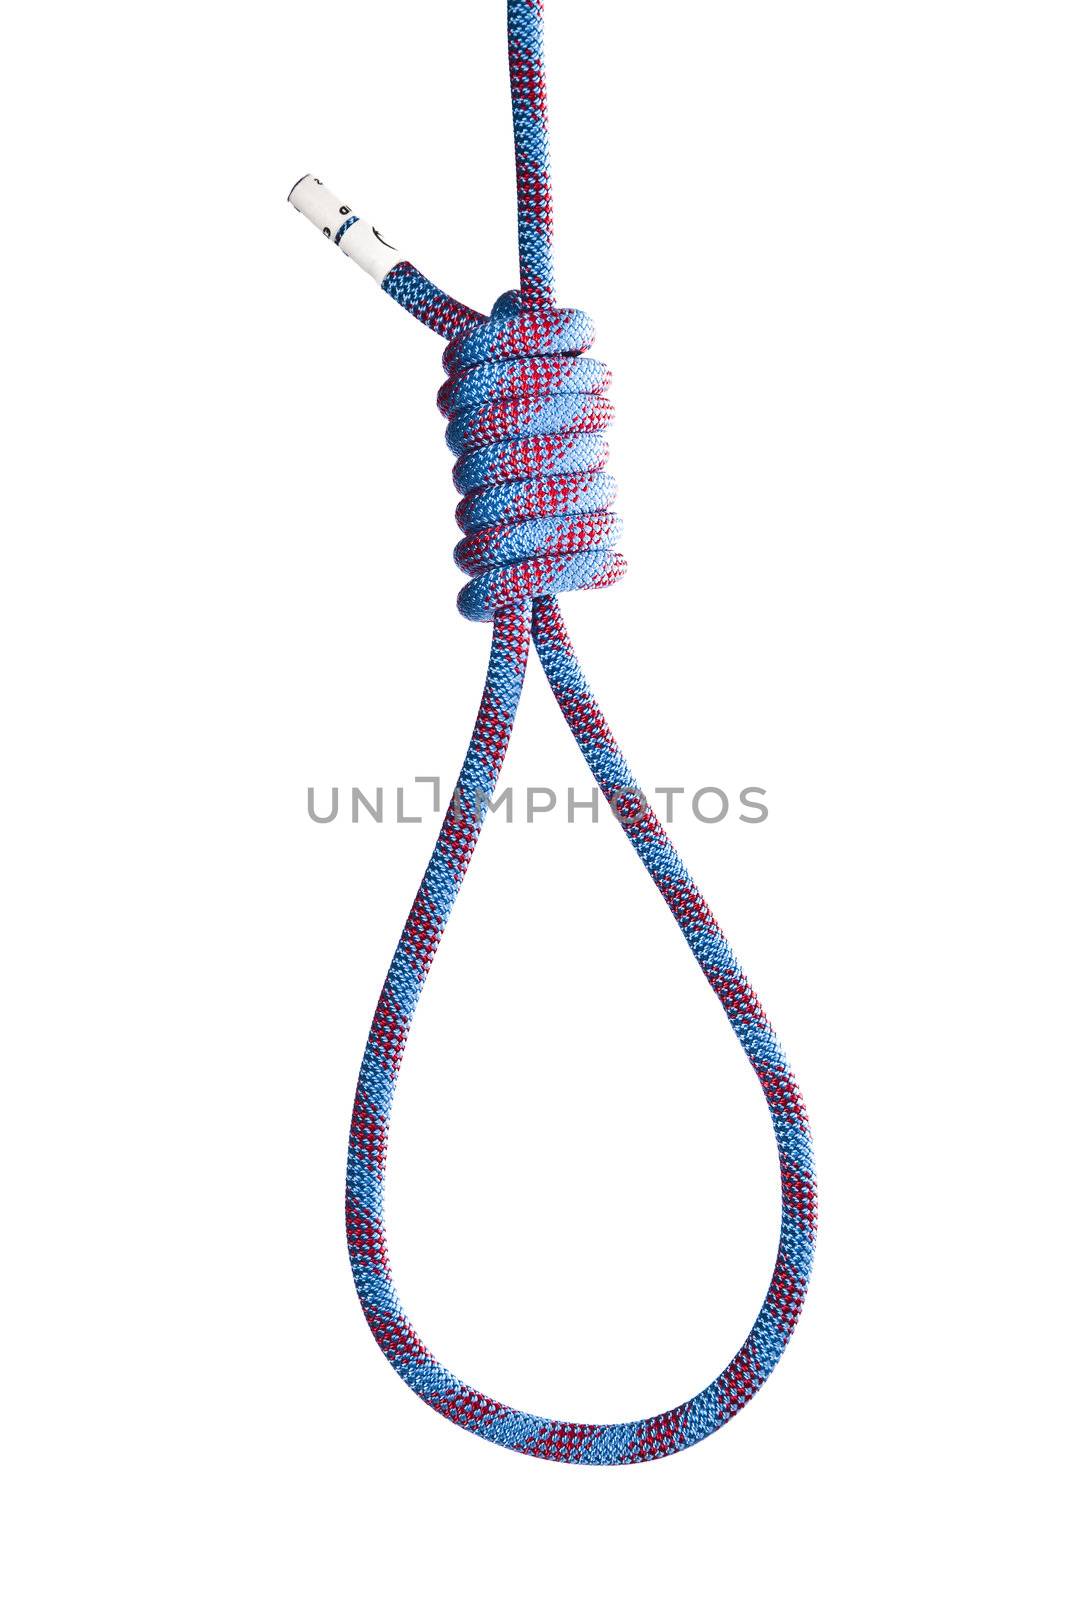 hanging noose by mjp